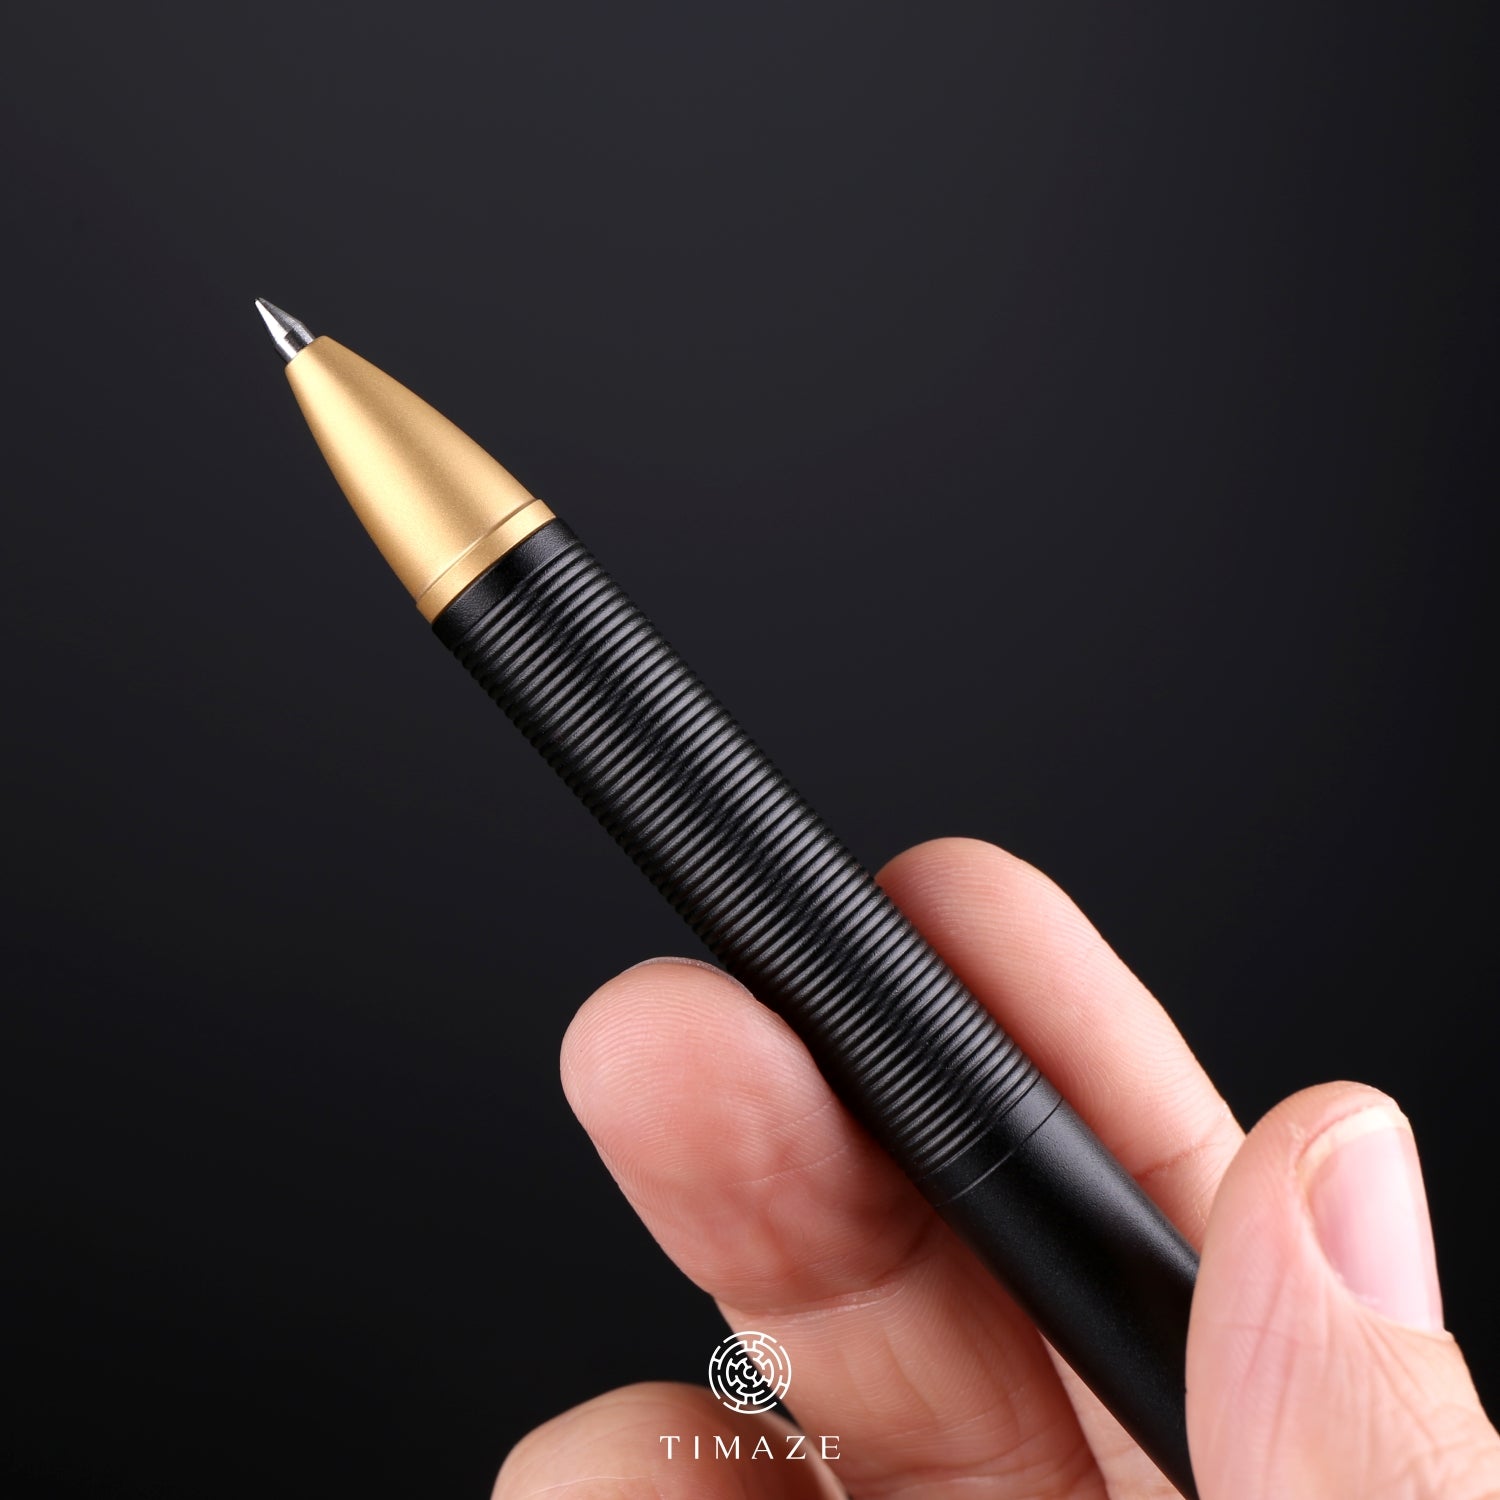 TIMAZE TAS-108-BL Titanium Bolt Pen PVD Black